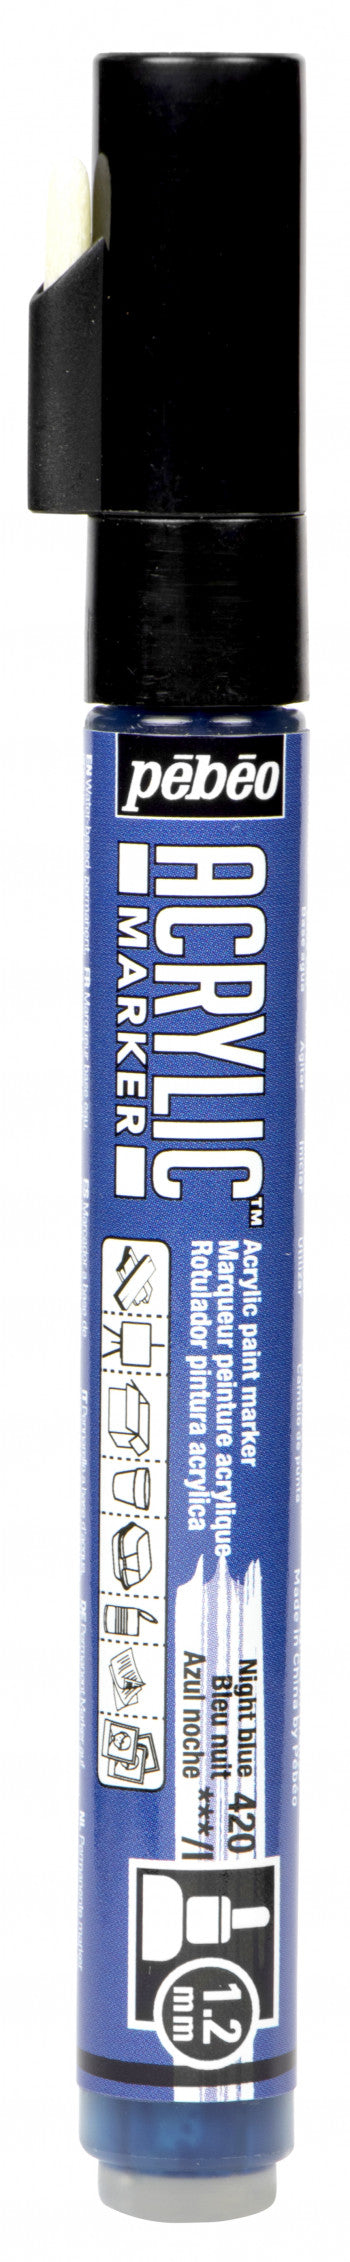 Acrylic Marker 1.2mm Pebeo     Bleu nuit - 420